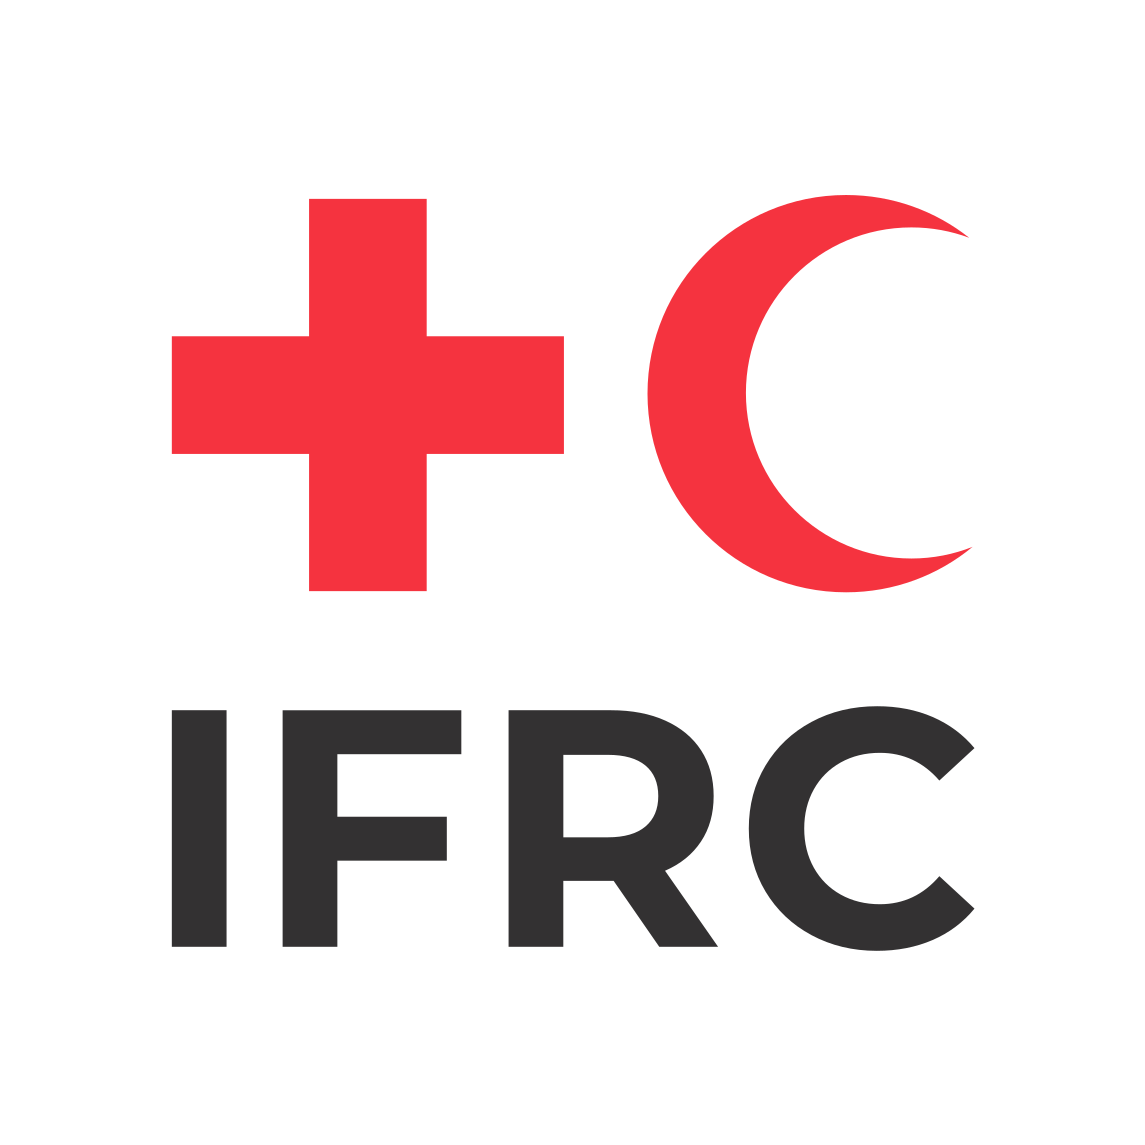 1200px-IFRC_logo_2020.svg